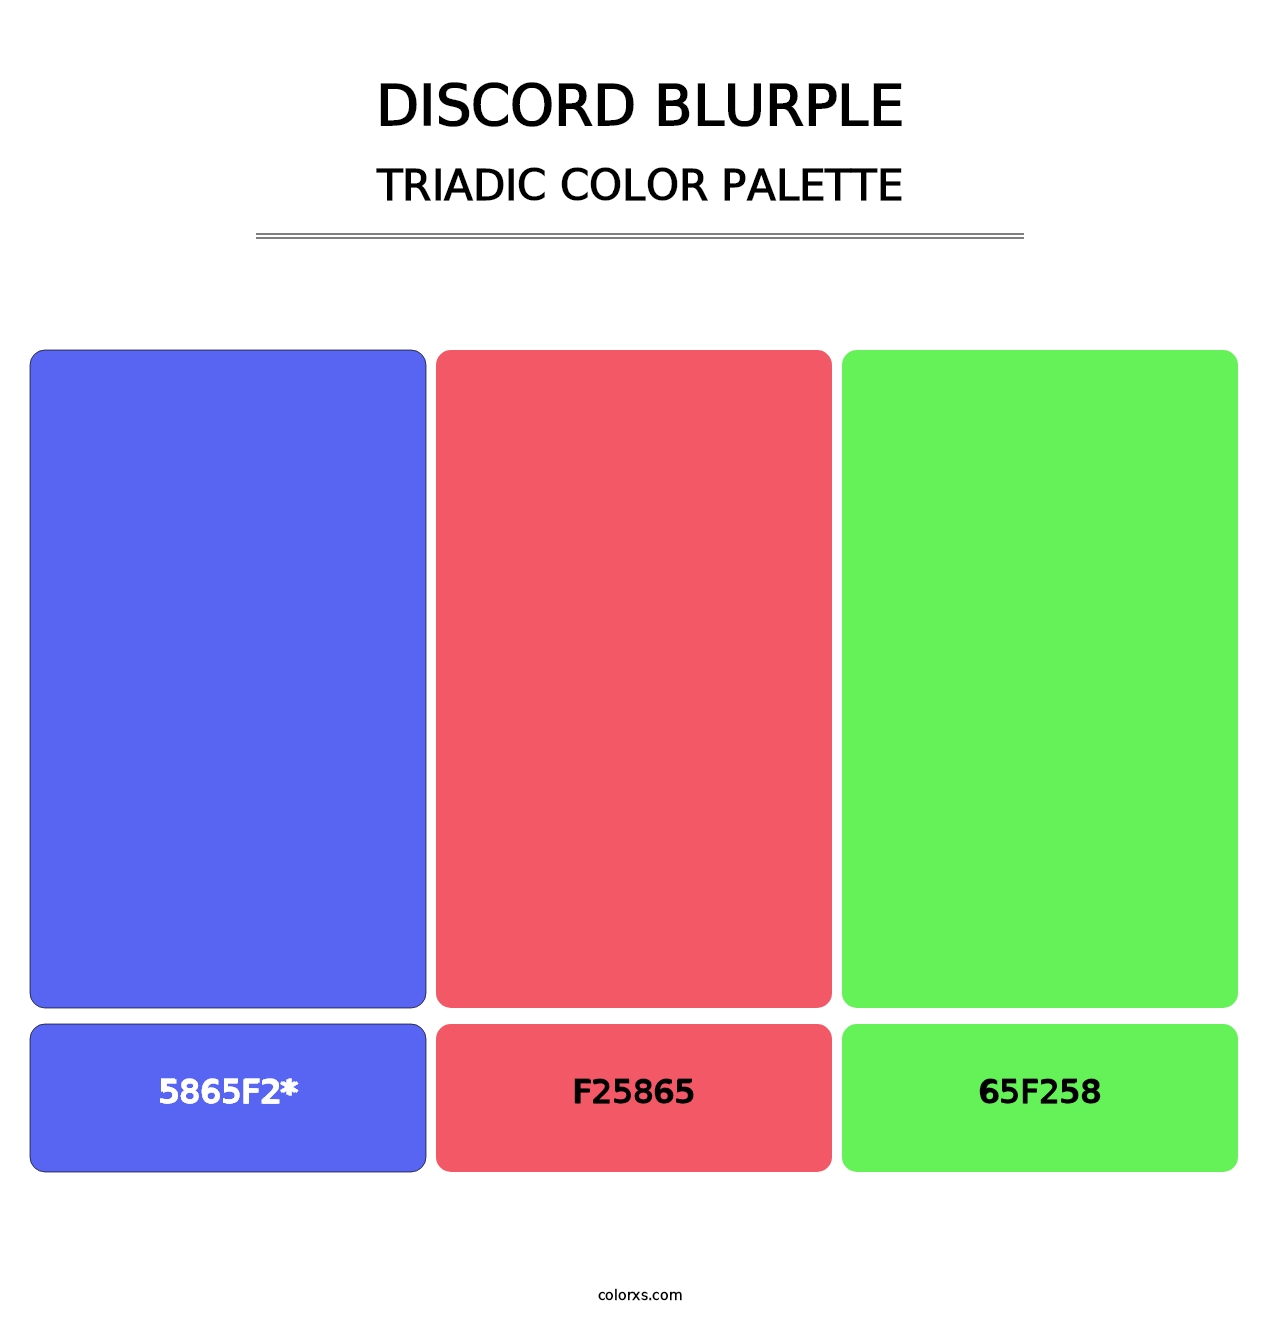 Discord Blurple - Triadic Color Palette